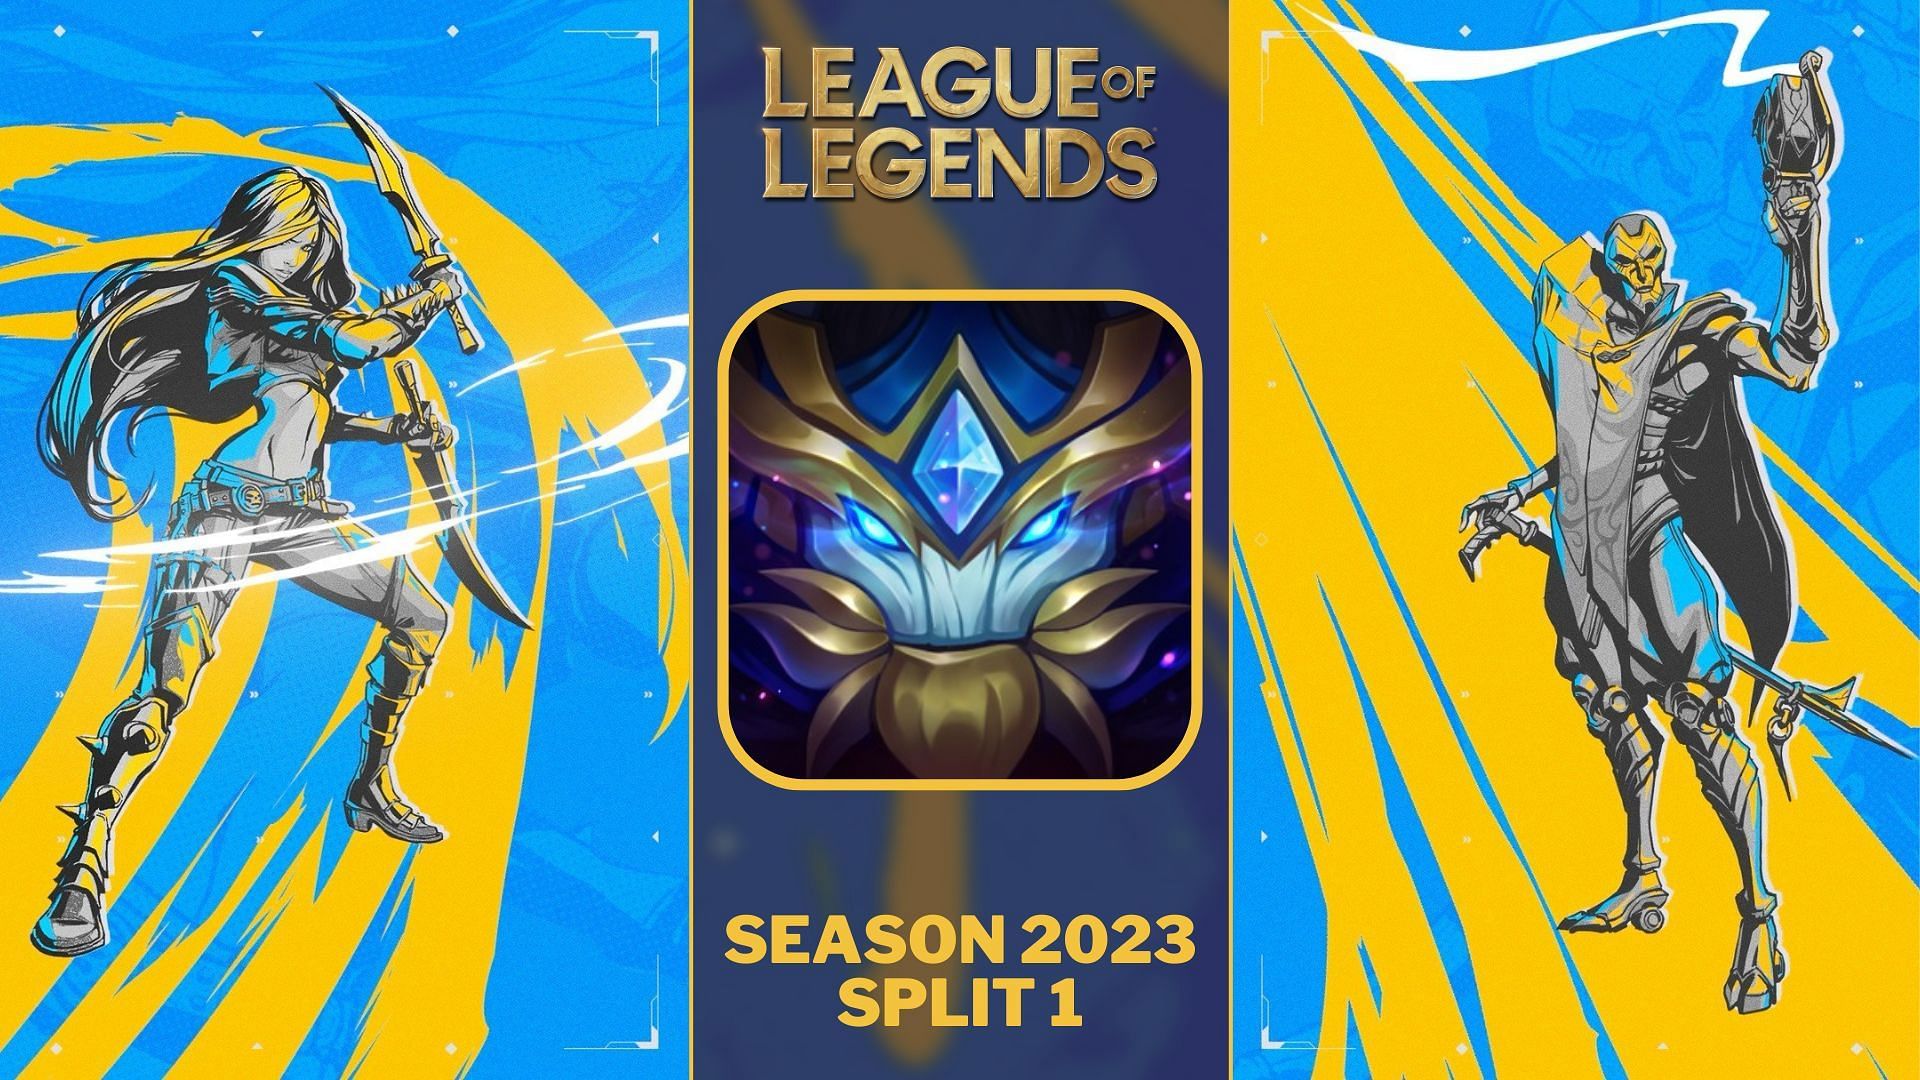 League of Legends Ranked Season 2023 Split 1: End date, rewards